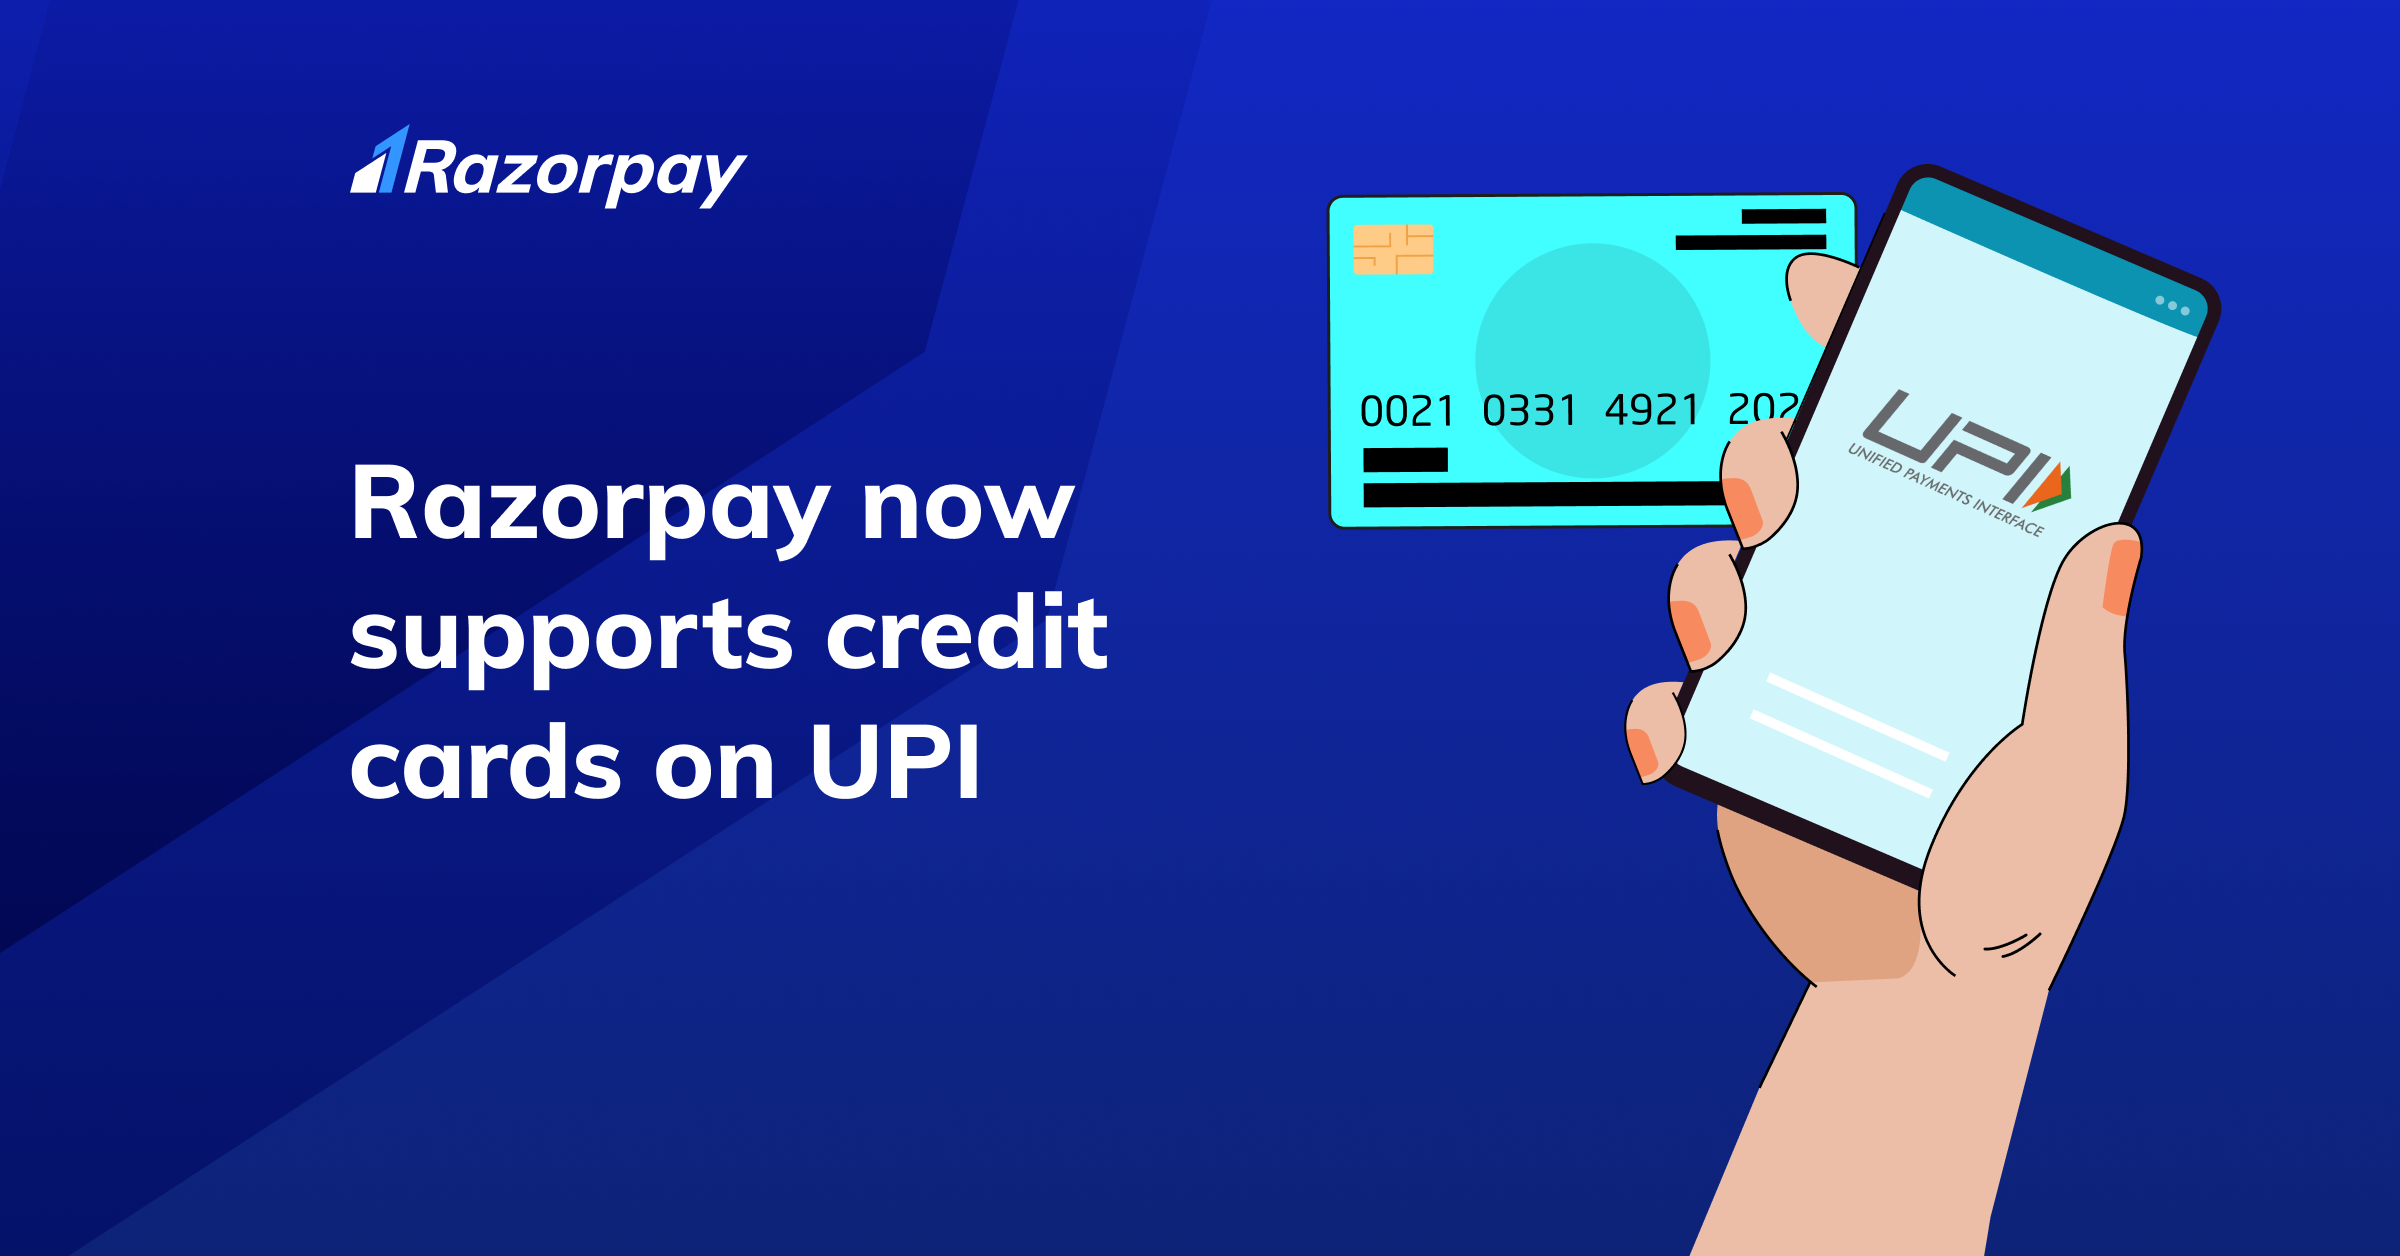 Razorpay enables merchants to accept credit card payments via UPI